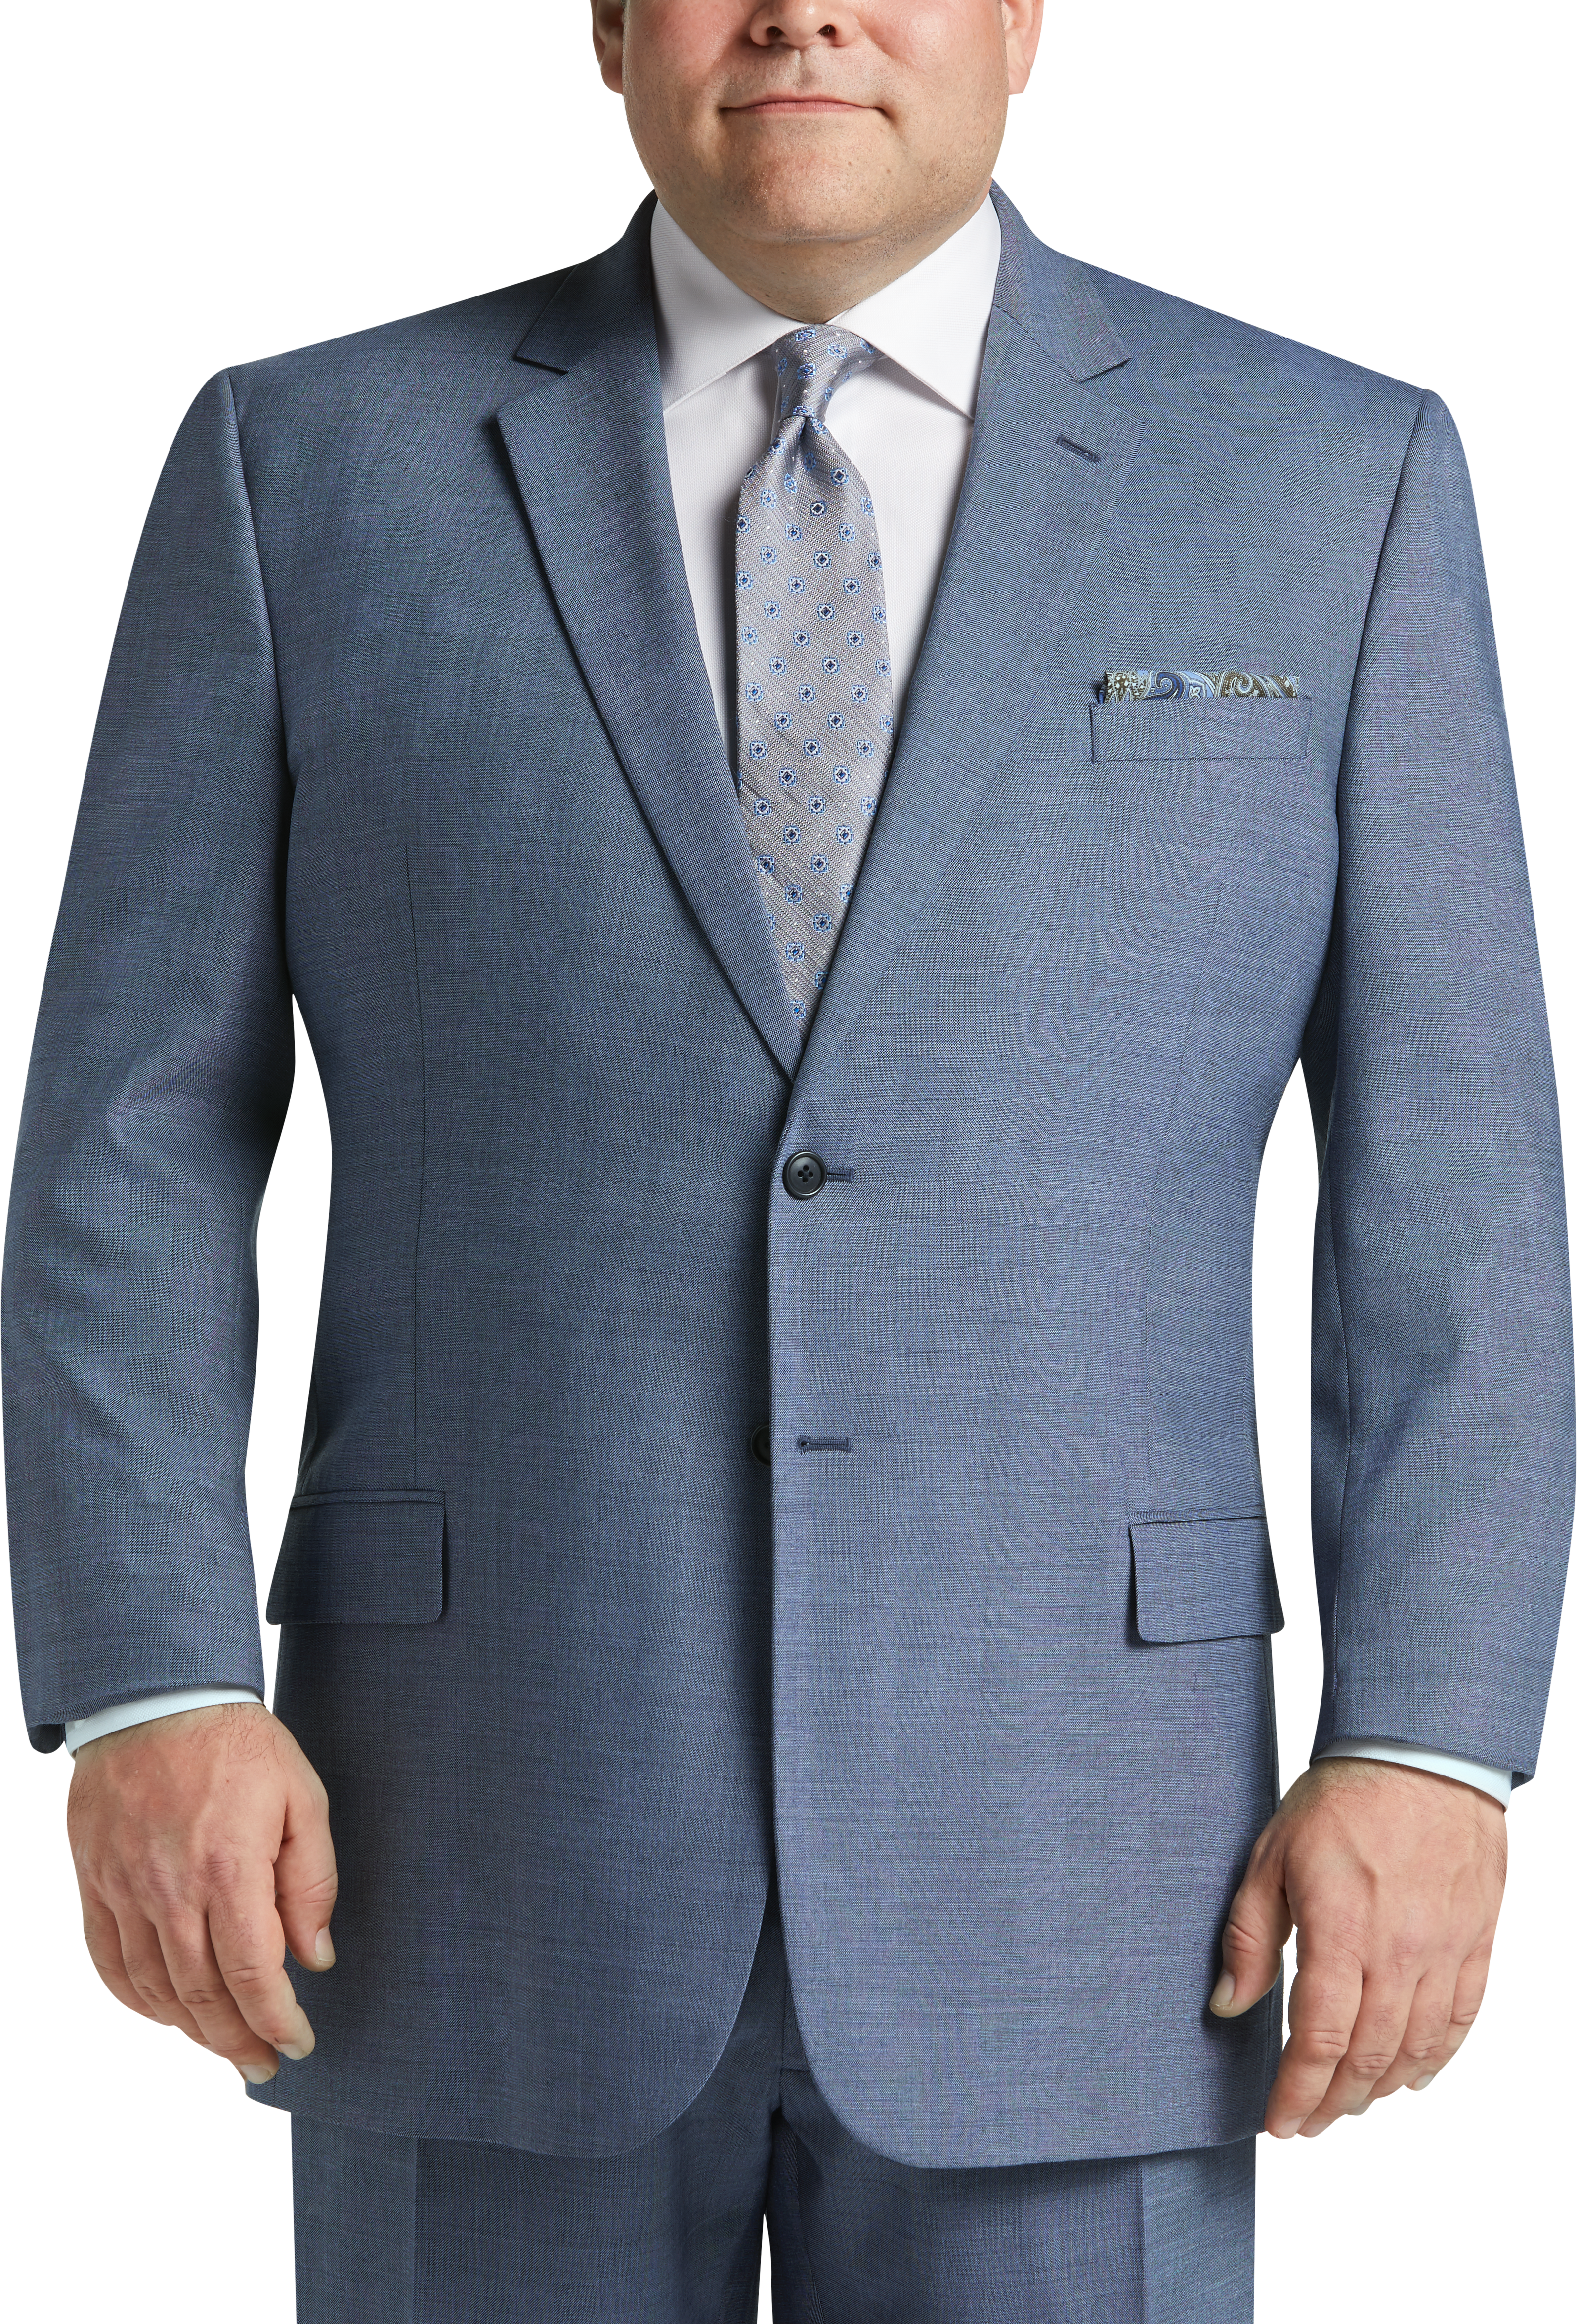 calvin klein light blue sharkskin slim fit suit